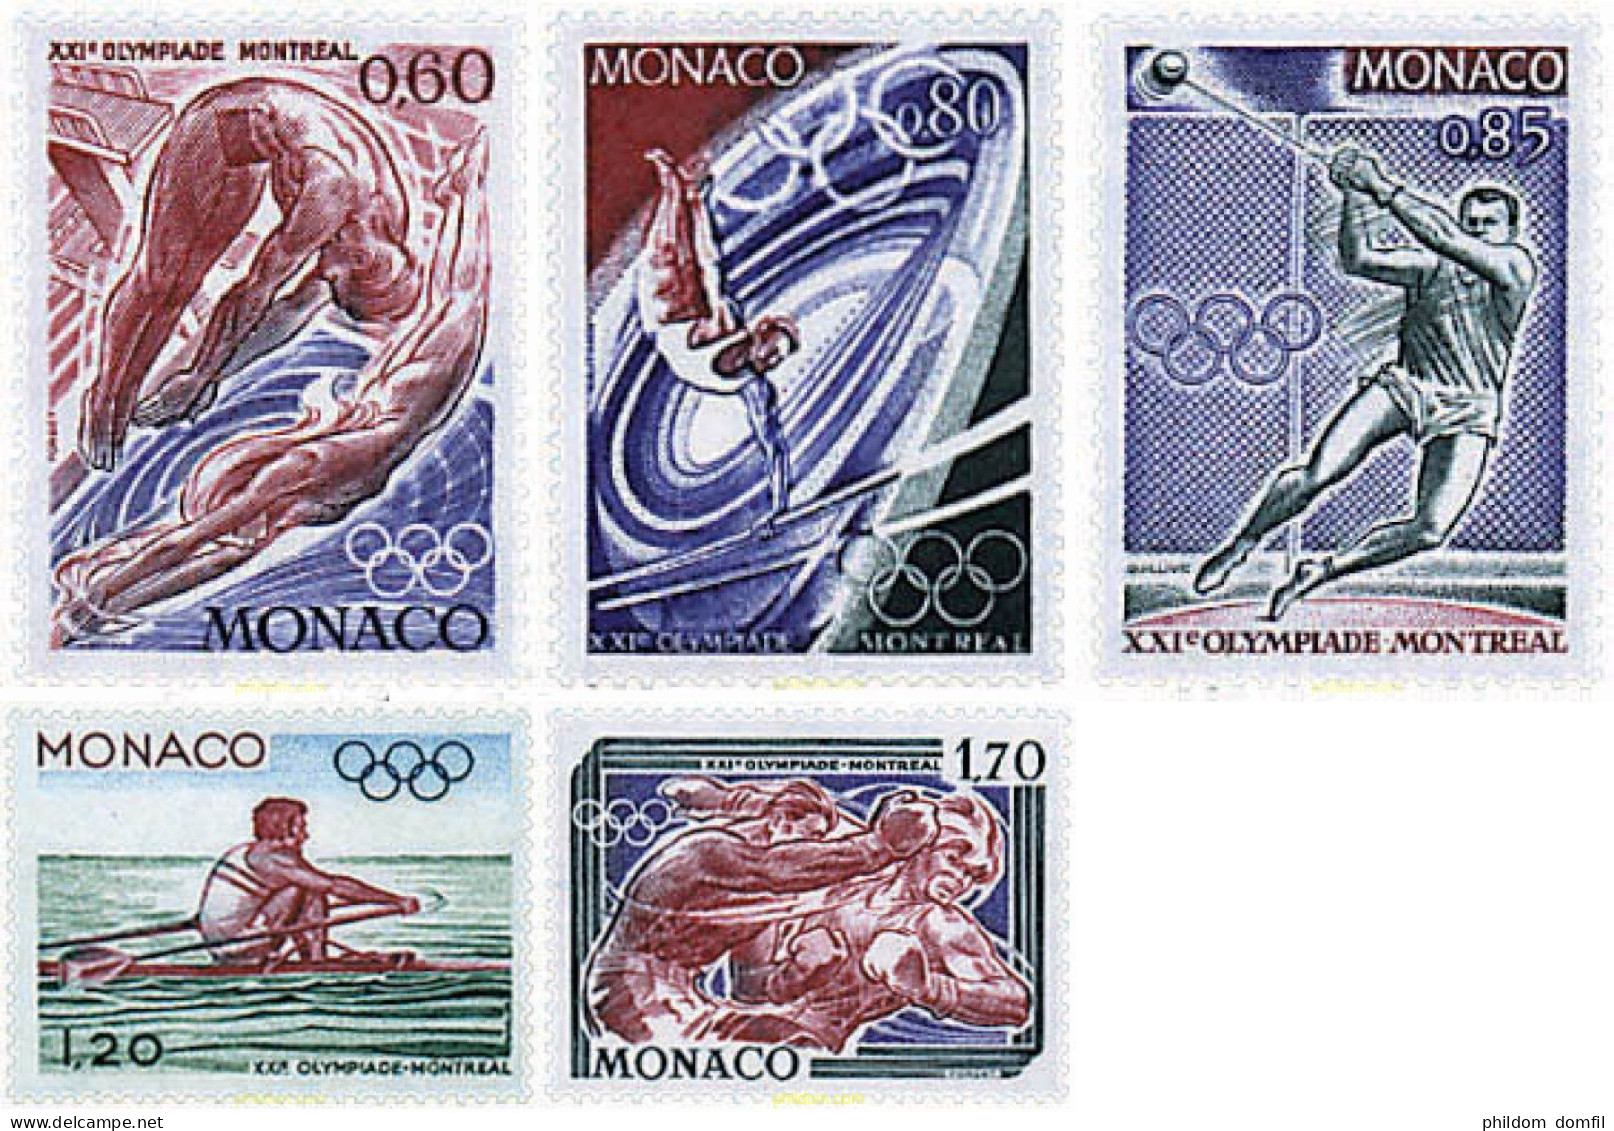 77454 MNH MONACO 1976 21 JUEGOS OLIMPICOS VERANO MONTREAL 1976 - Unused Stamps